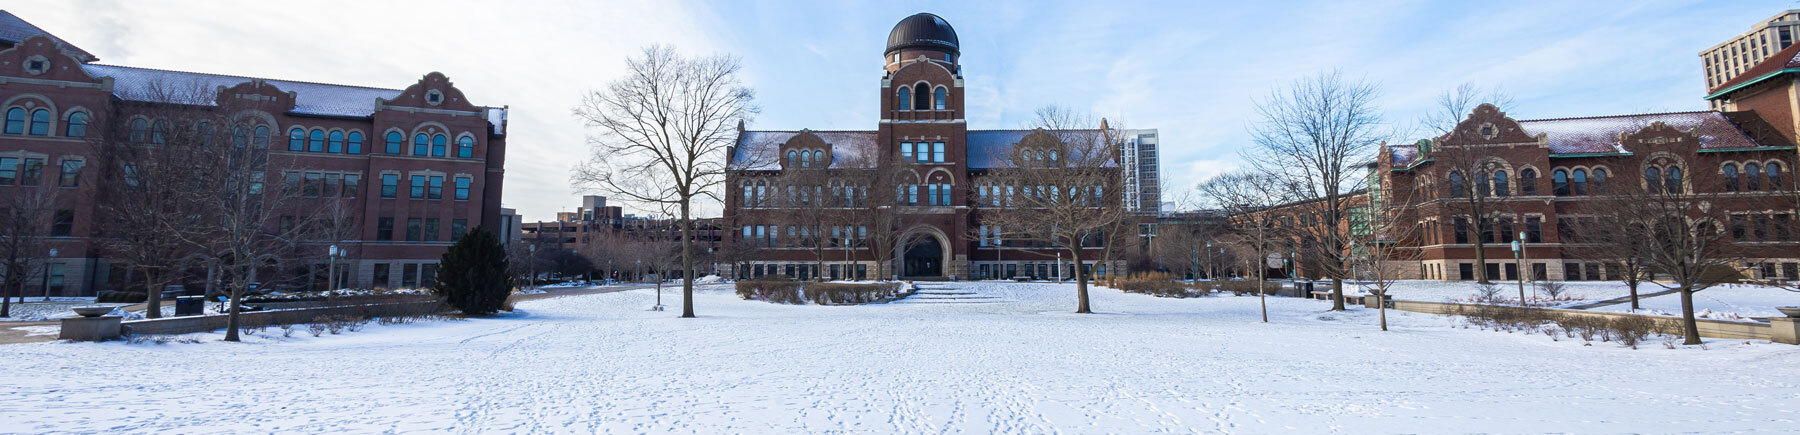 Loyola campus with snow